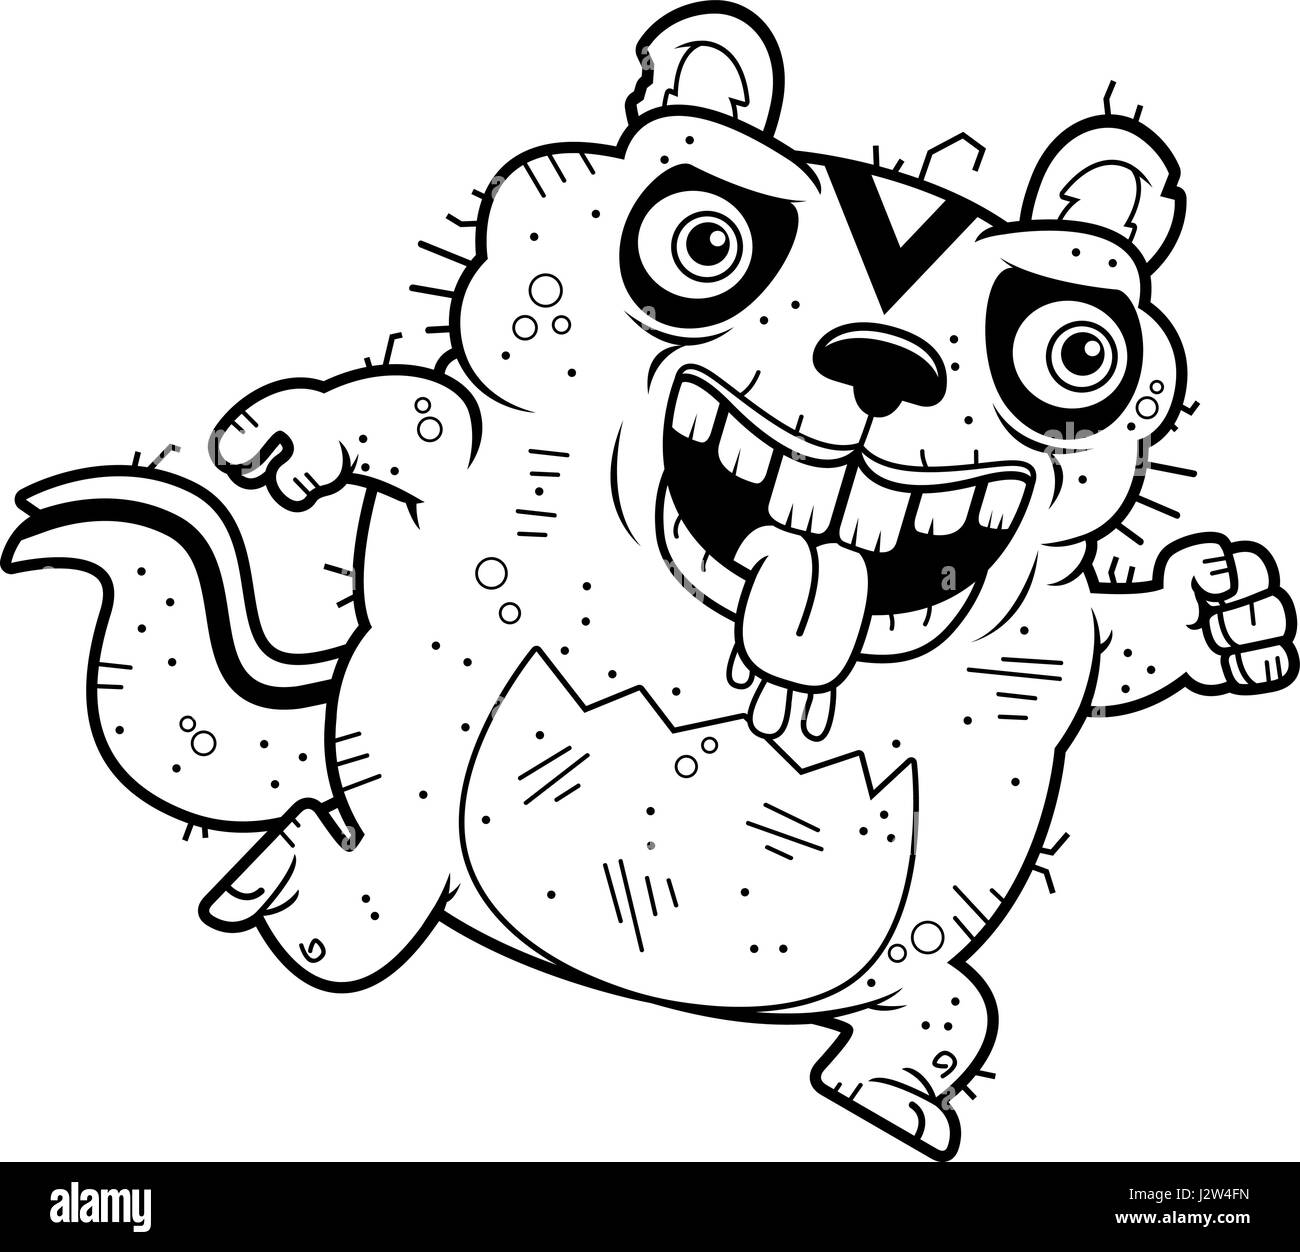 A cartoon illustration of an ugly chipmunk running. Stock Vector